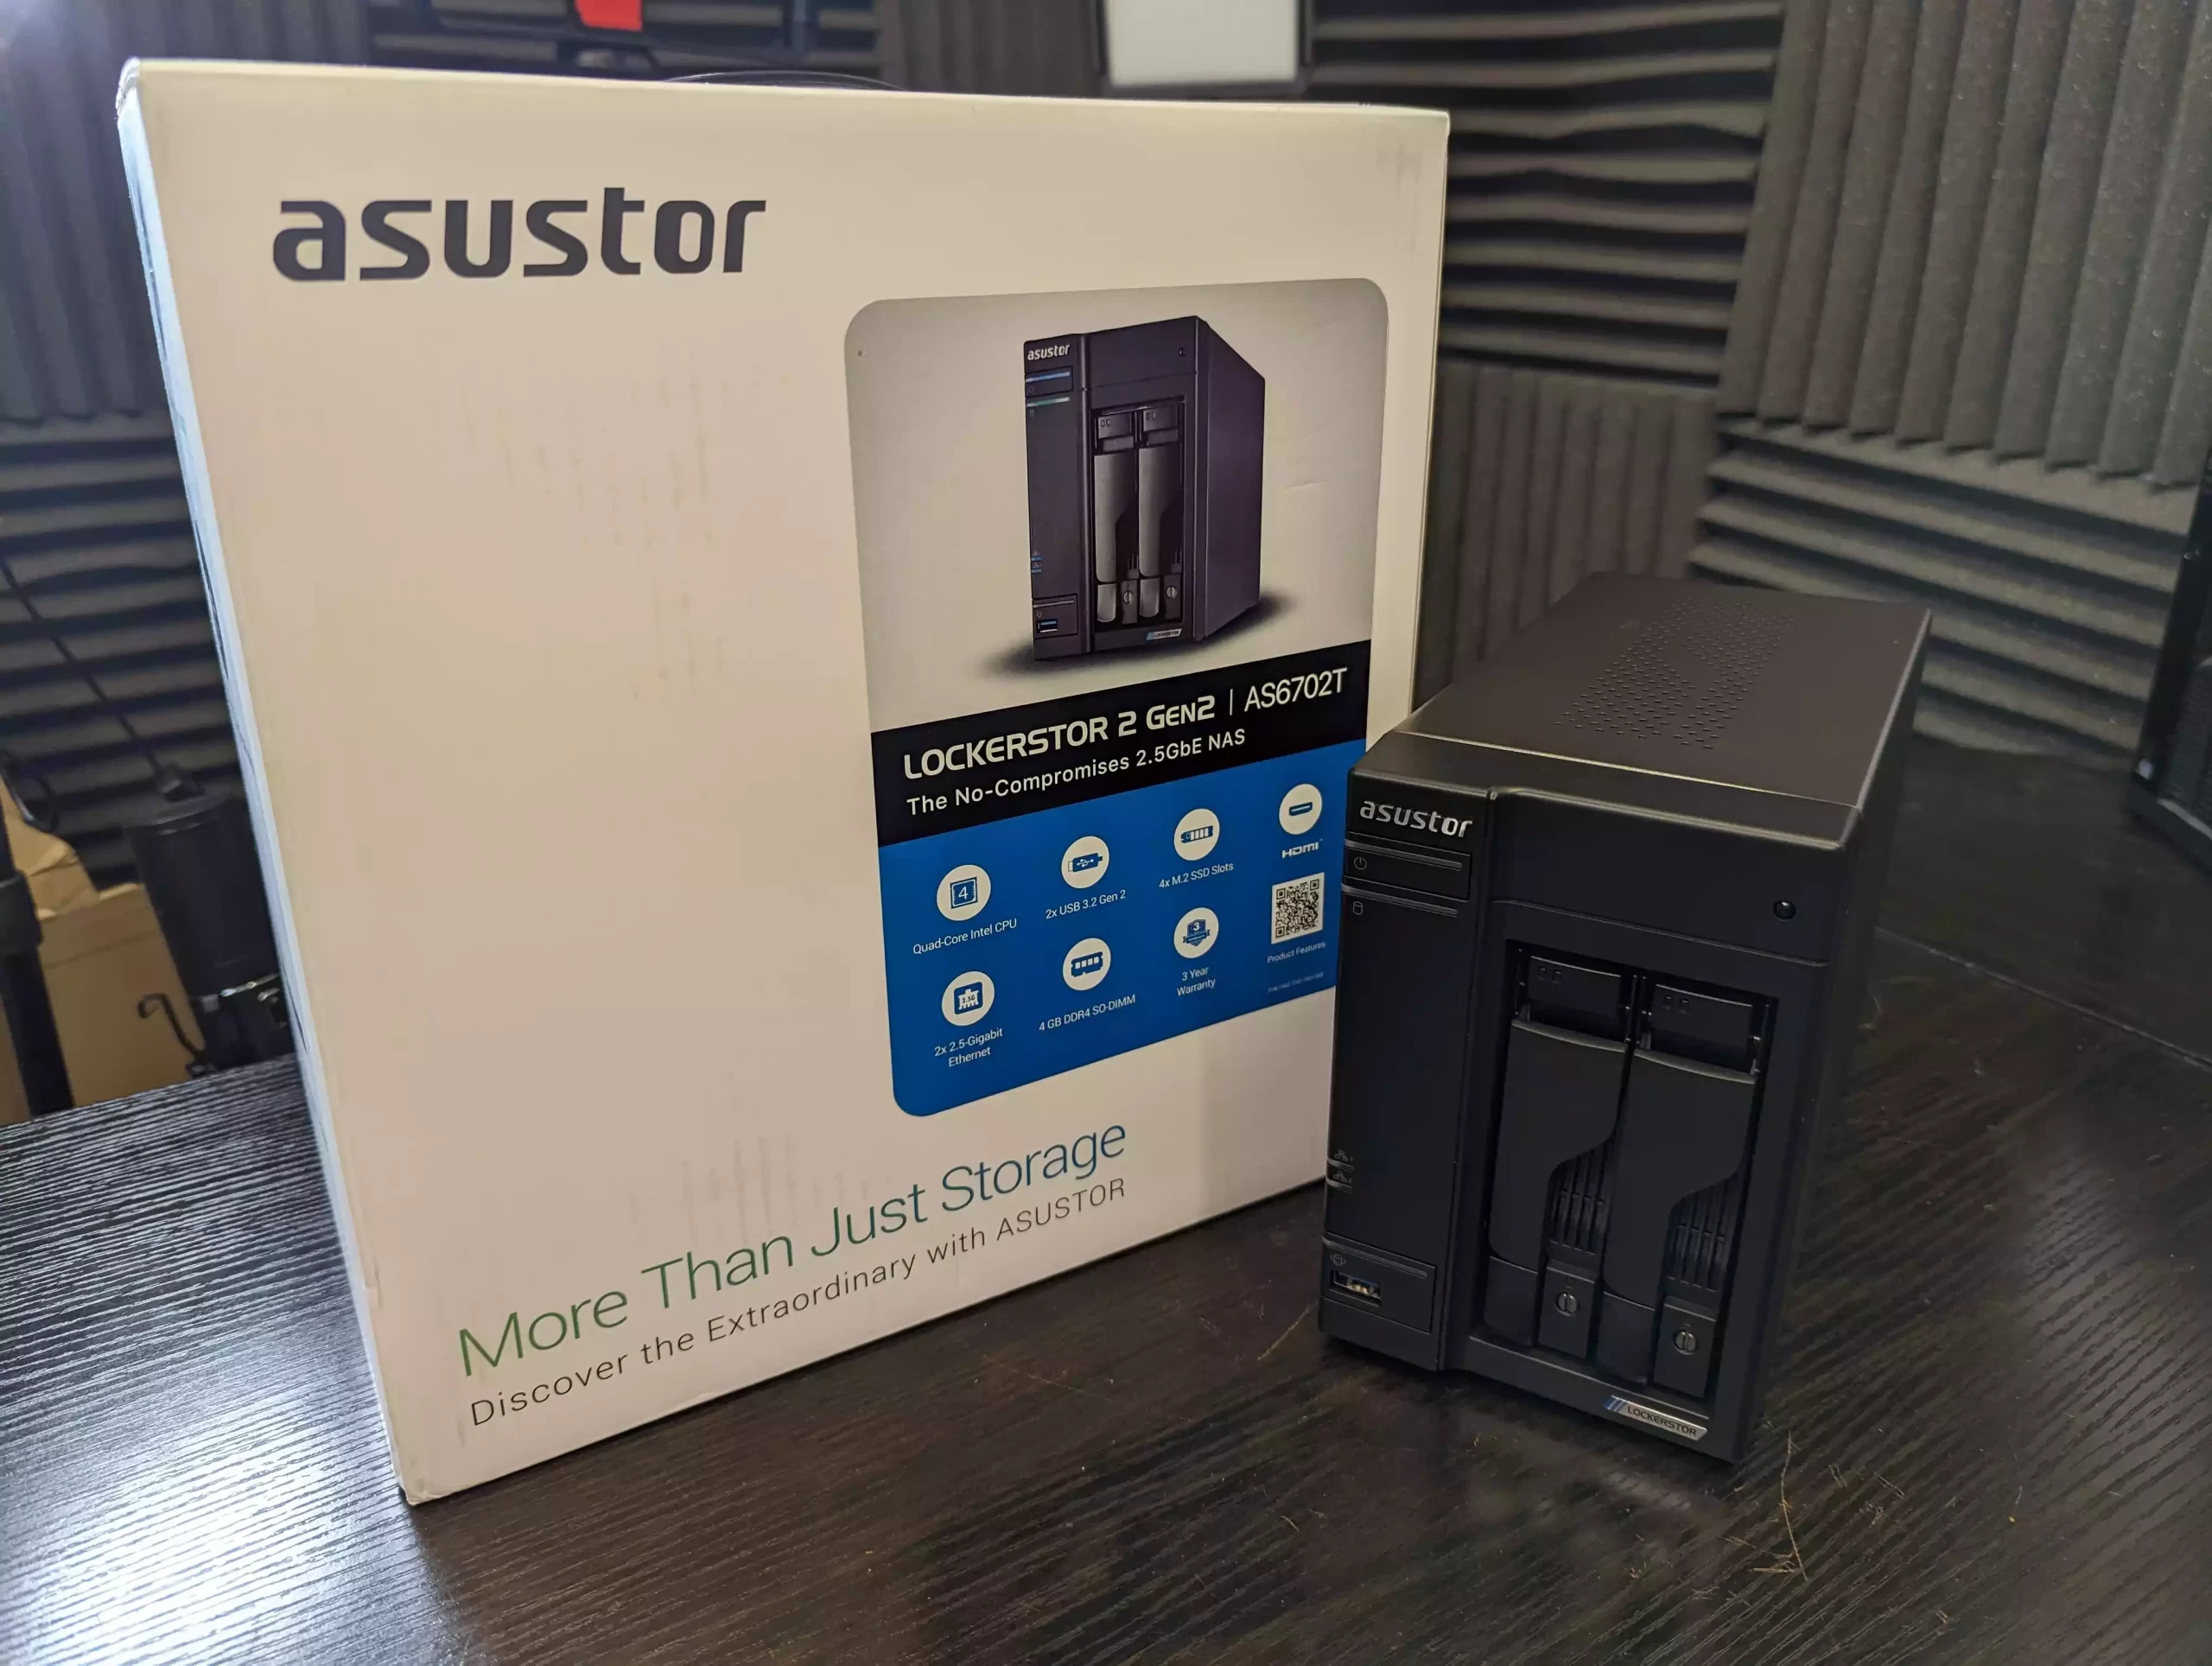 Test : NAS Asustor Lockerstor 2 Gen2 AS6702T - Pause Hardware